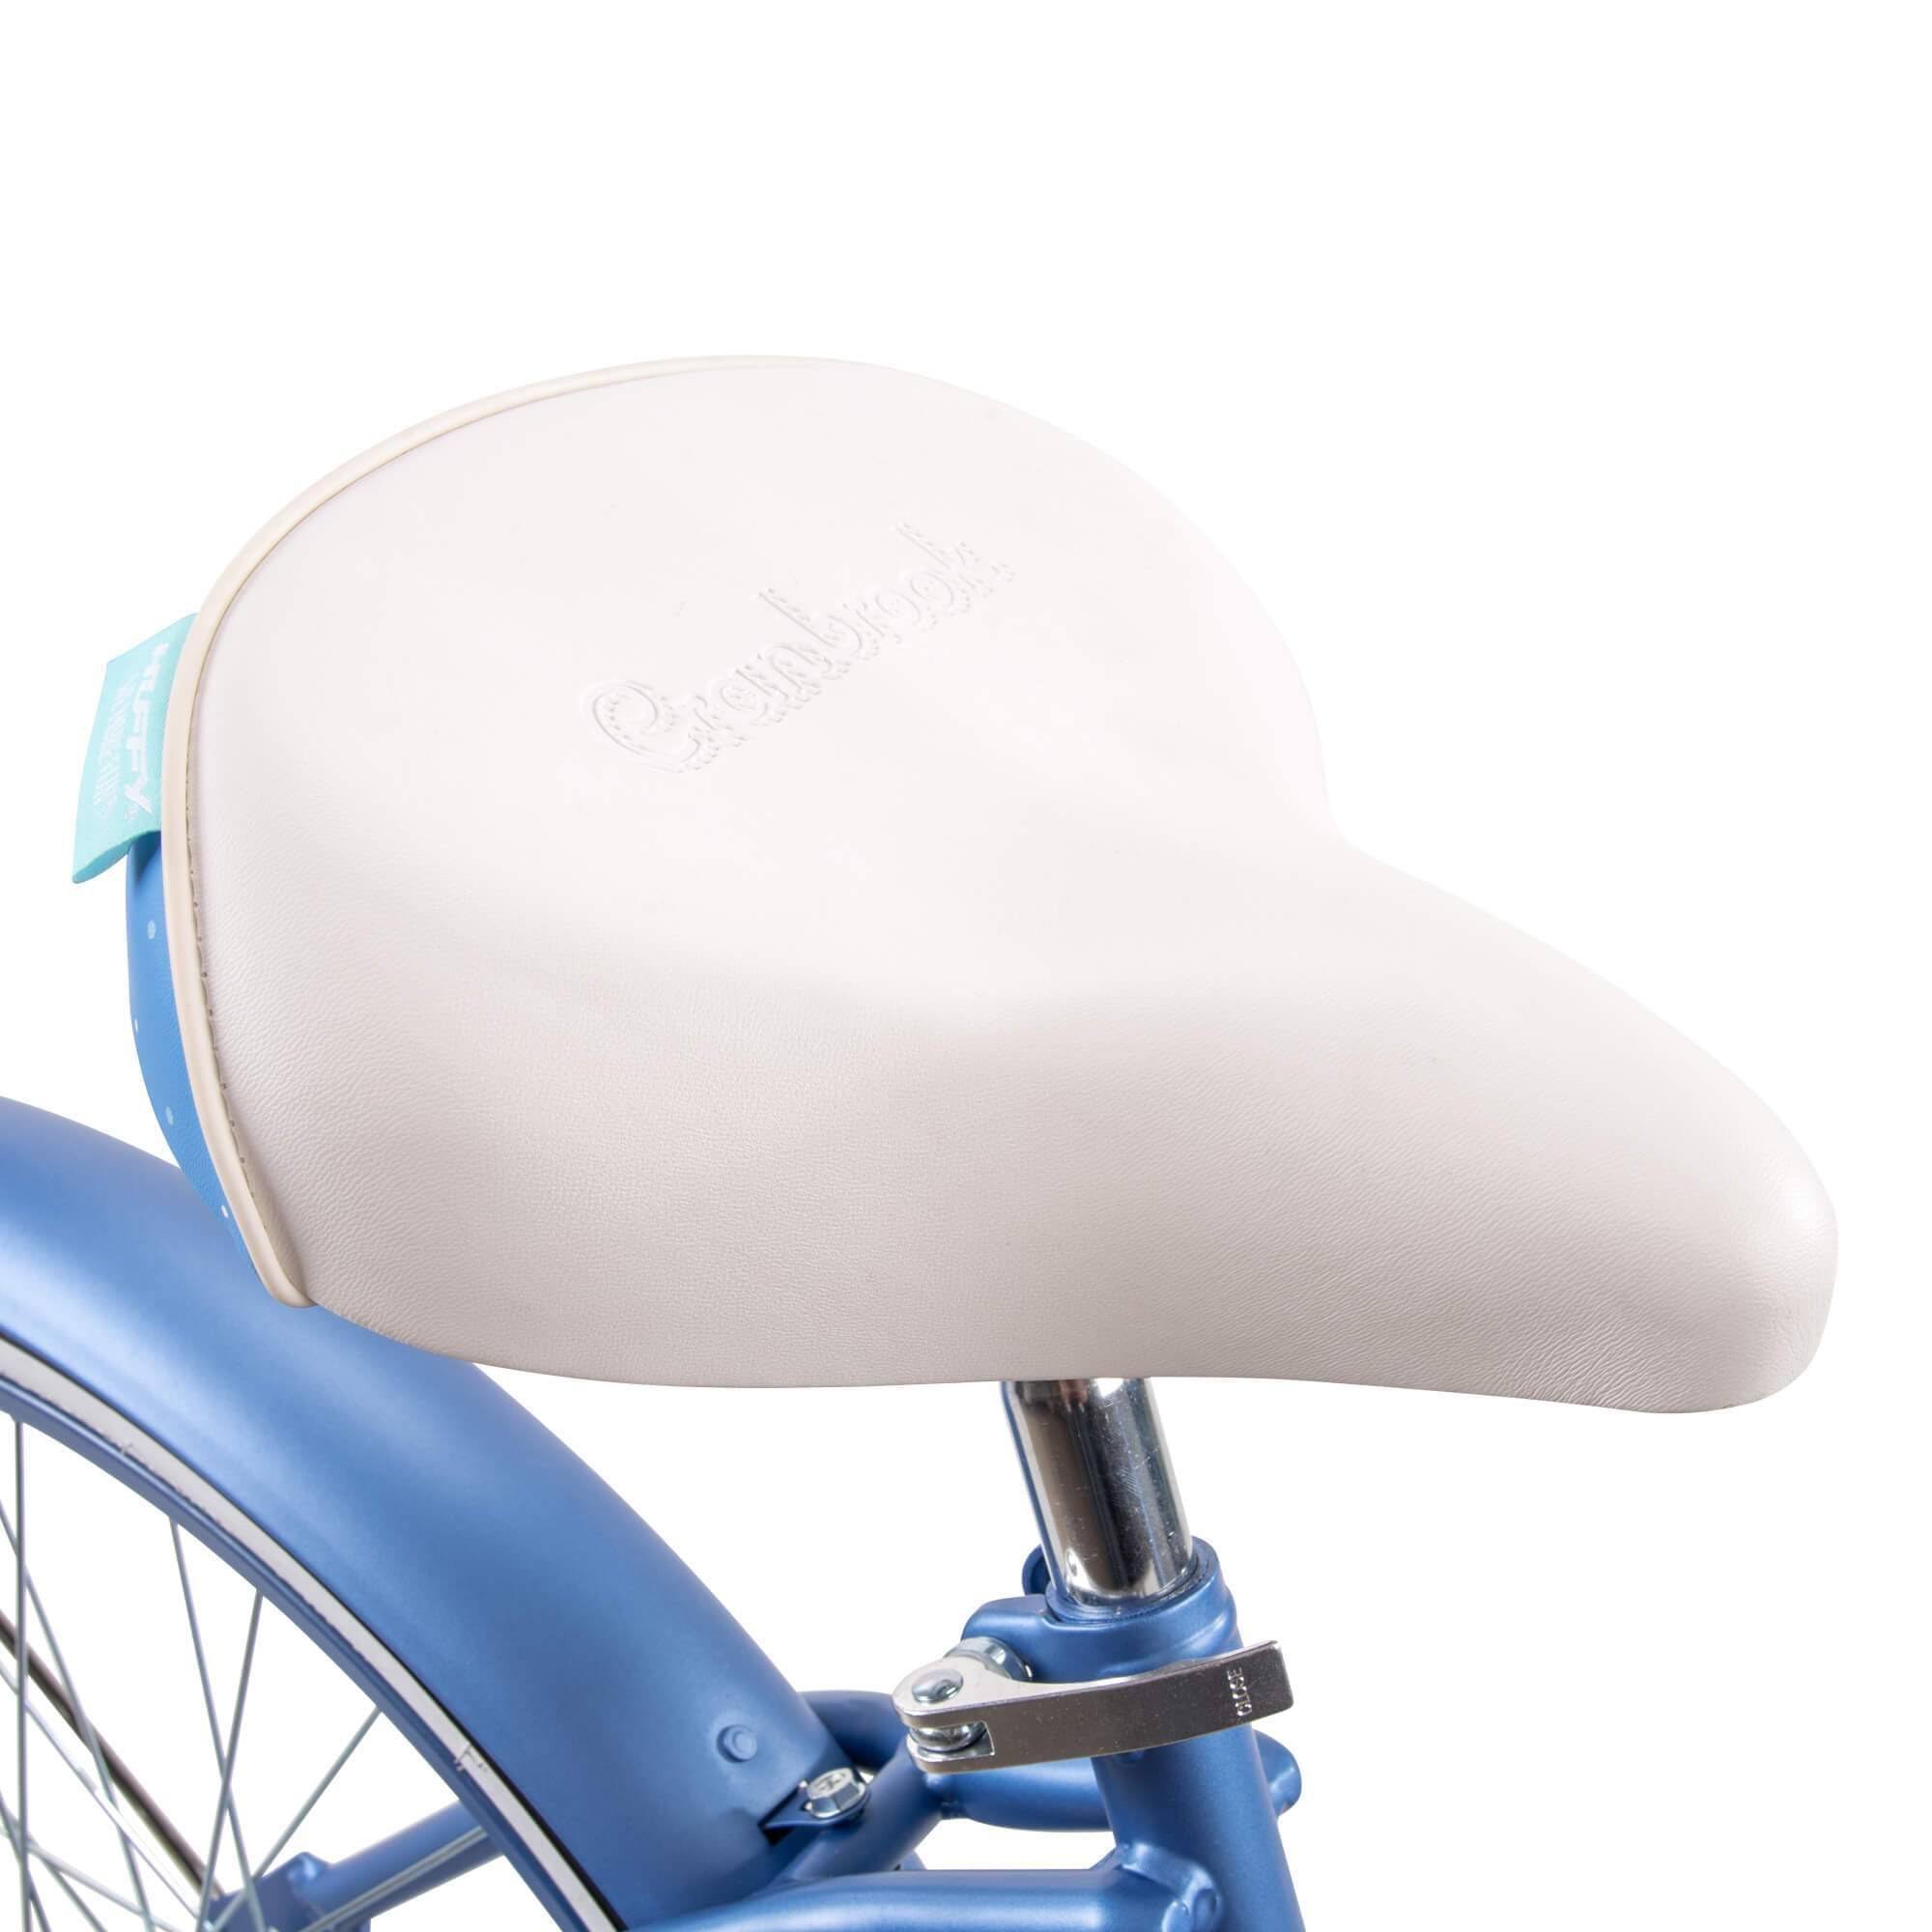 Huffy 24″ Cranbrook Womens Comfort Cruiser Bike Periwinkle Blue